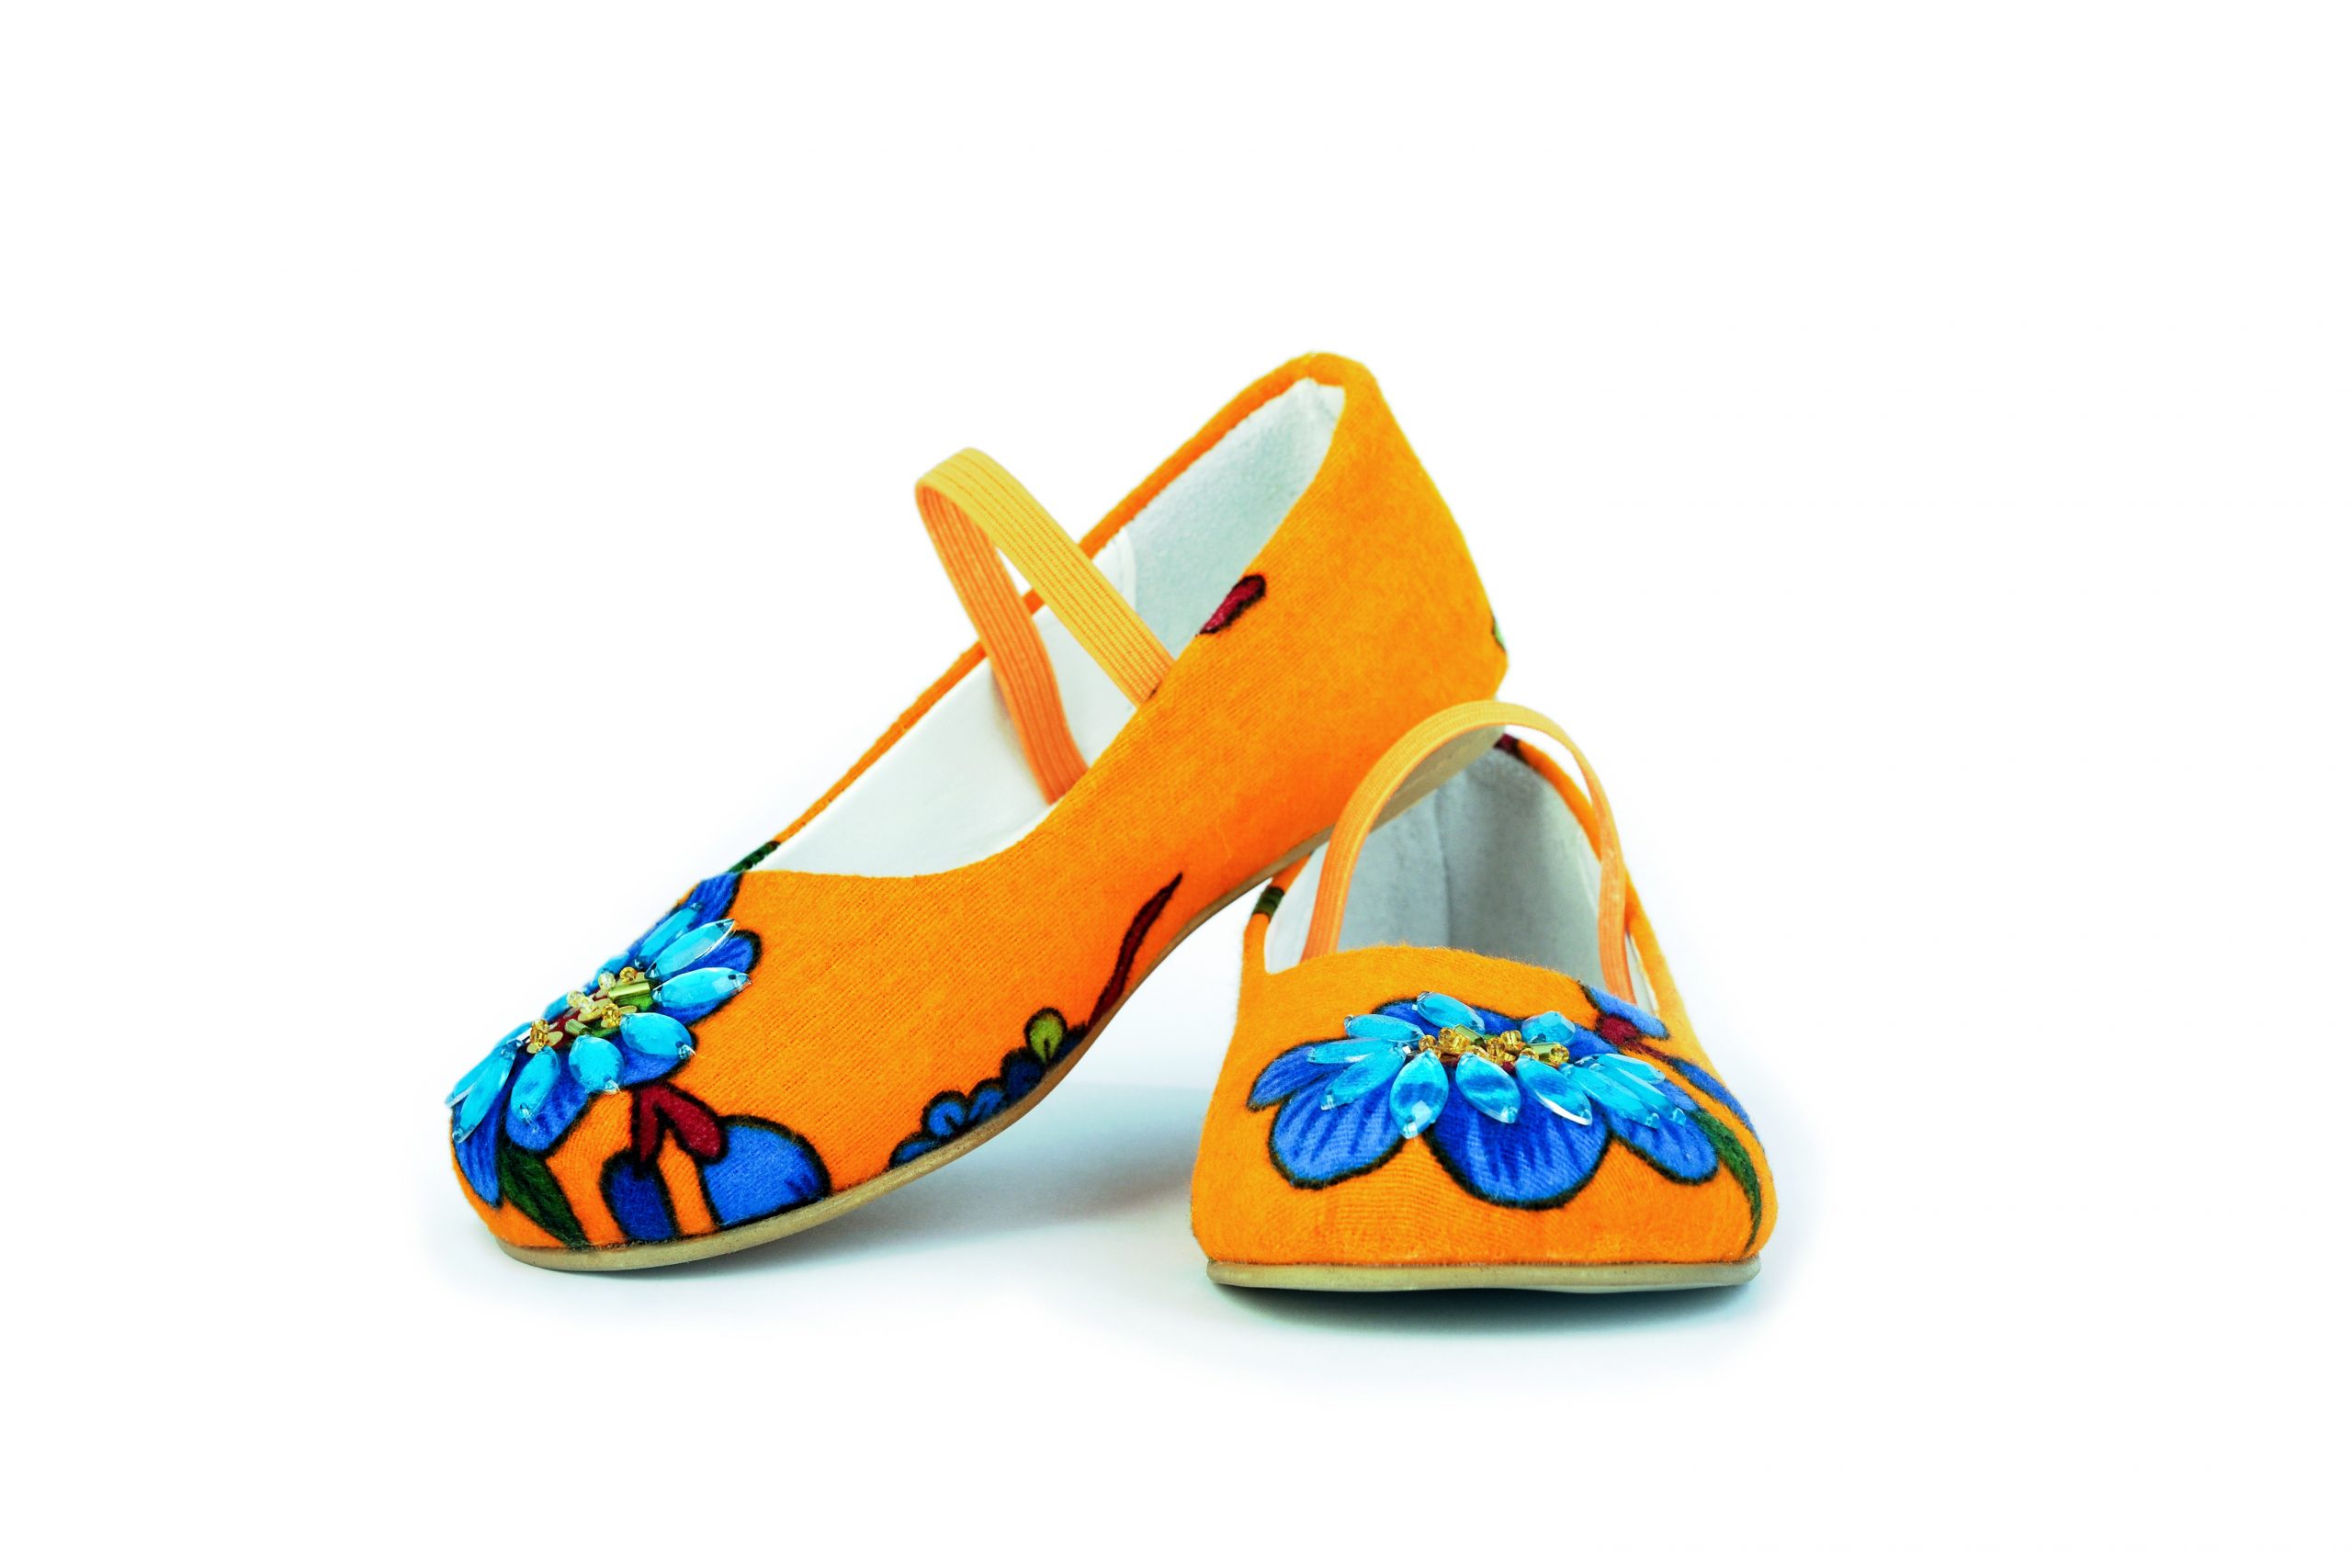 orange-shoes-with-stones-scaled-2.jpg